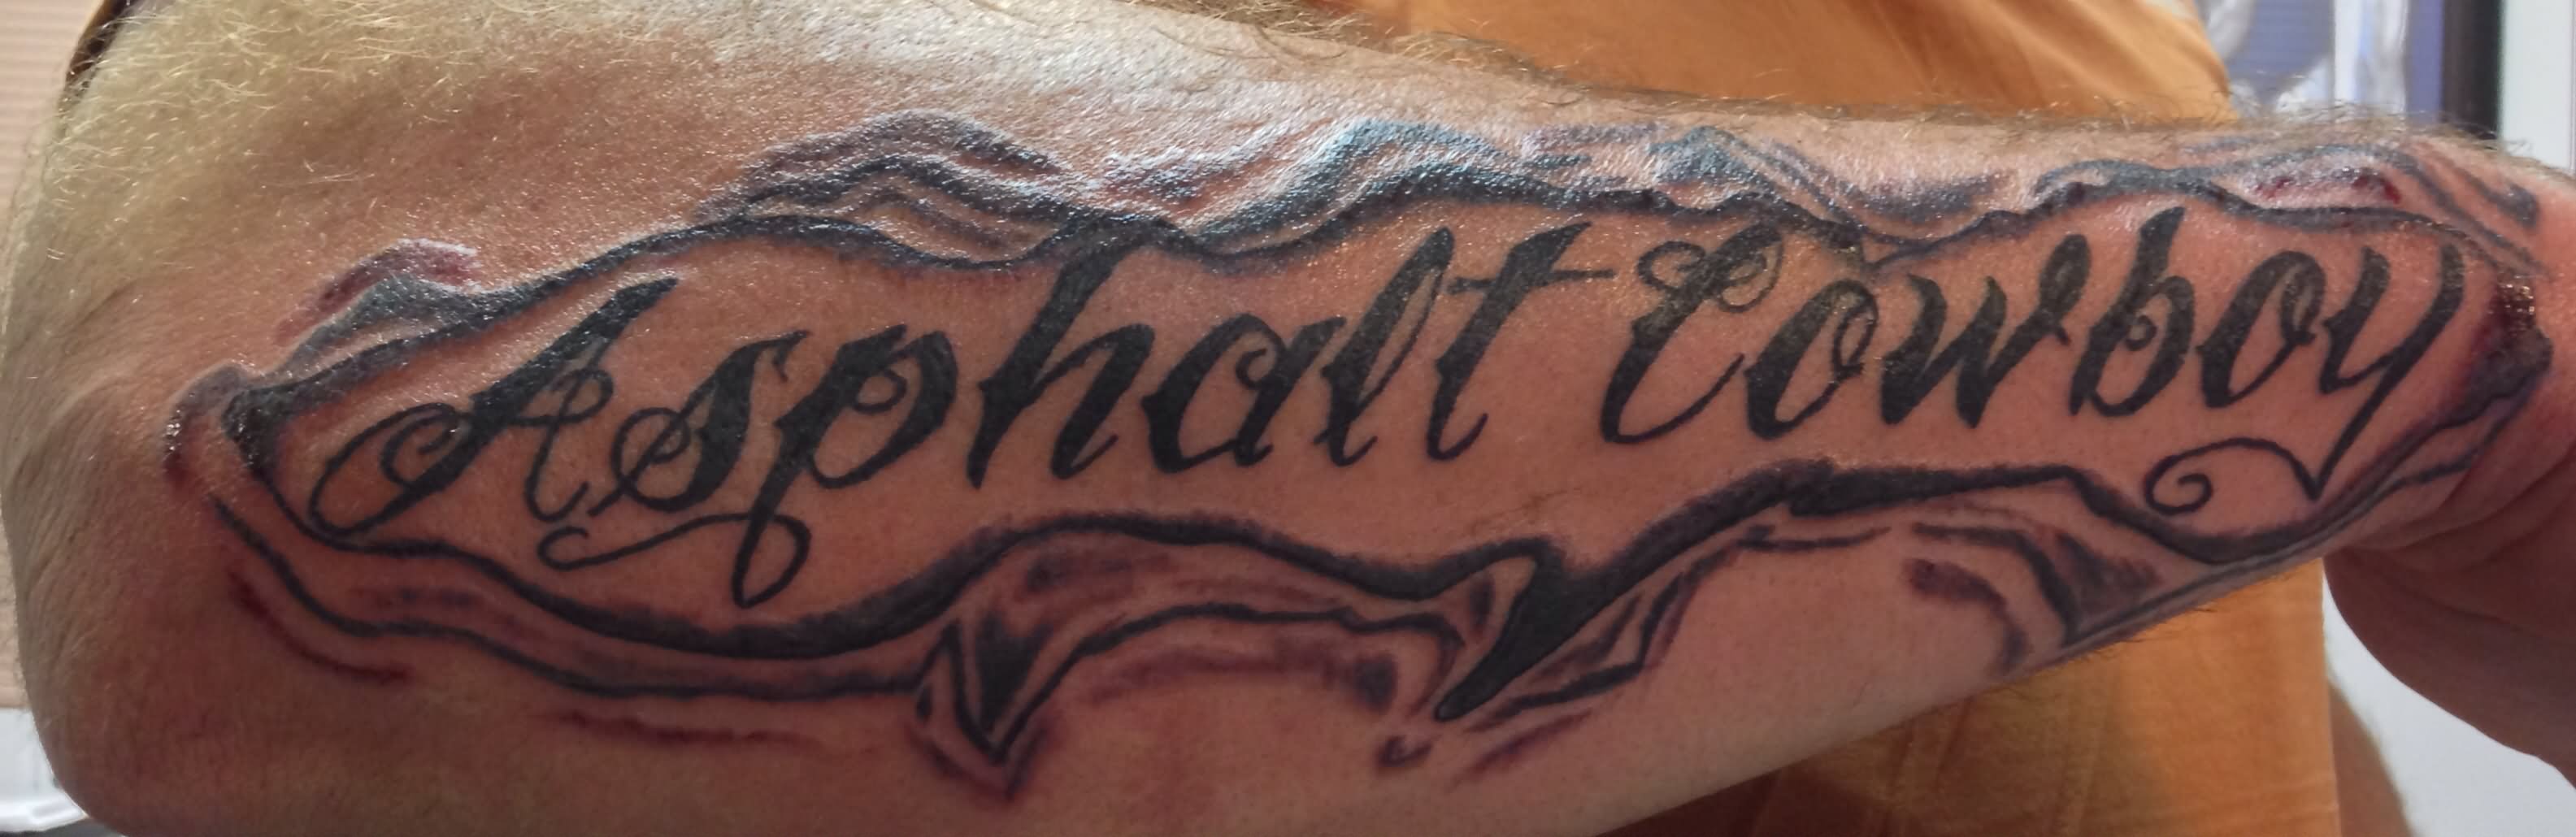 Asphalt Cowboy Lettering Tattoo On Forearm